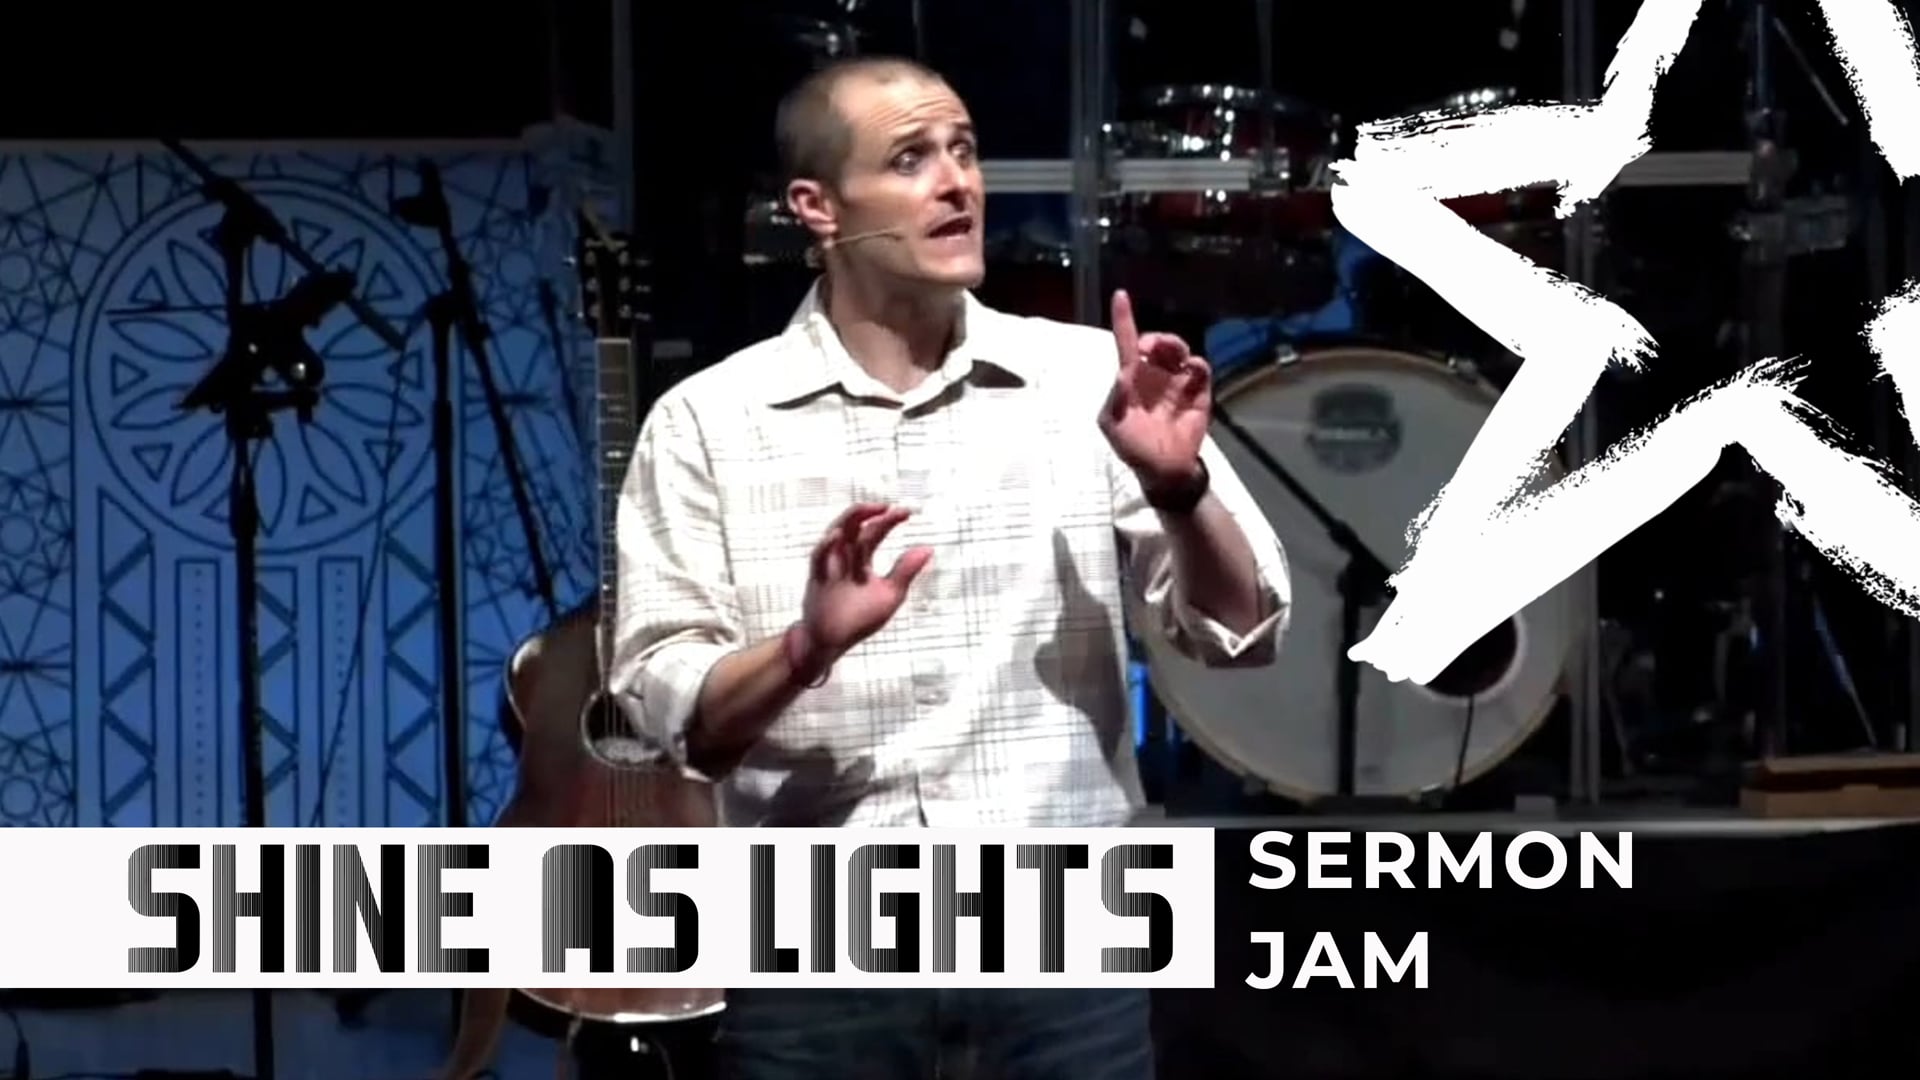 Shine As Lights Sermon Jam